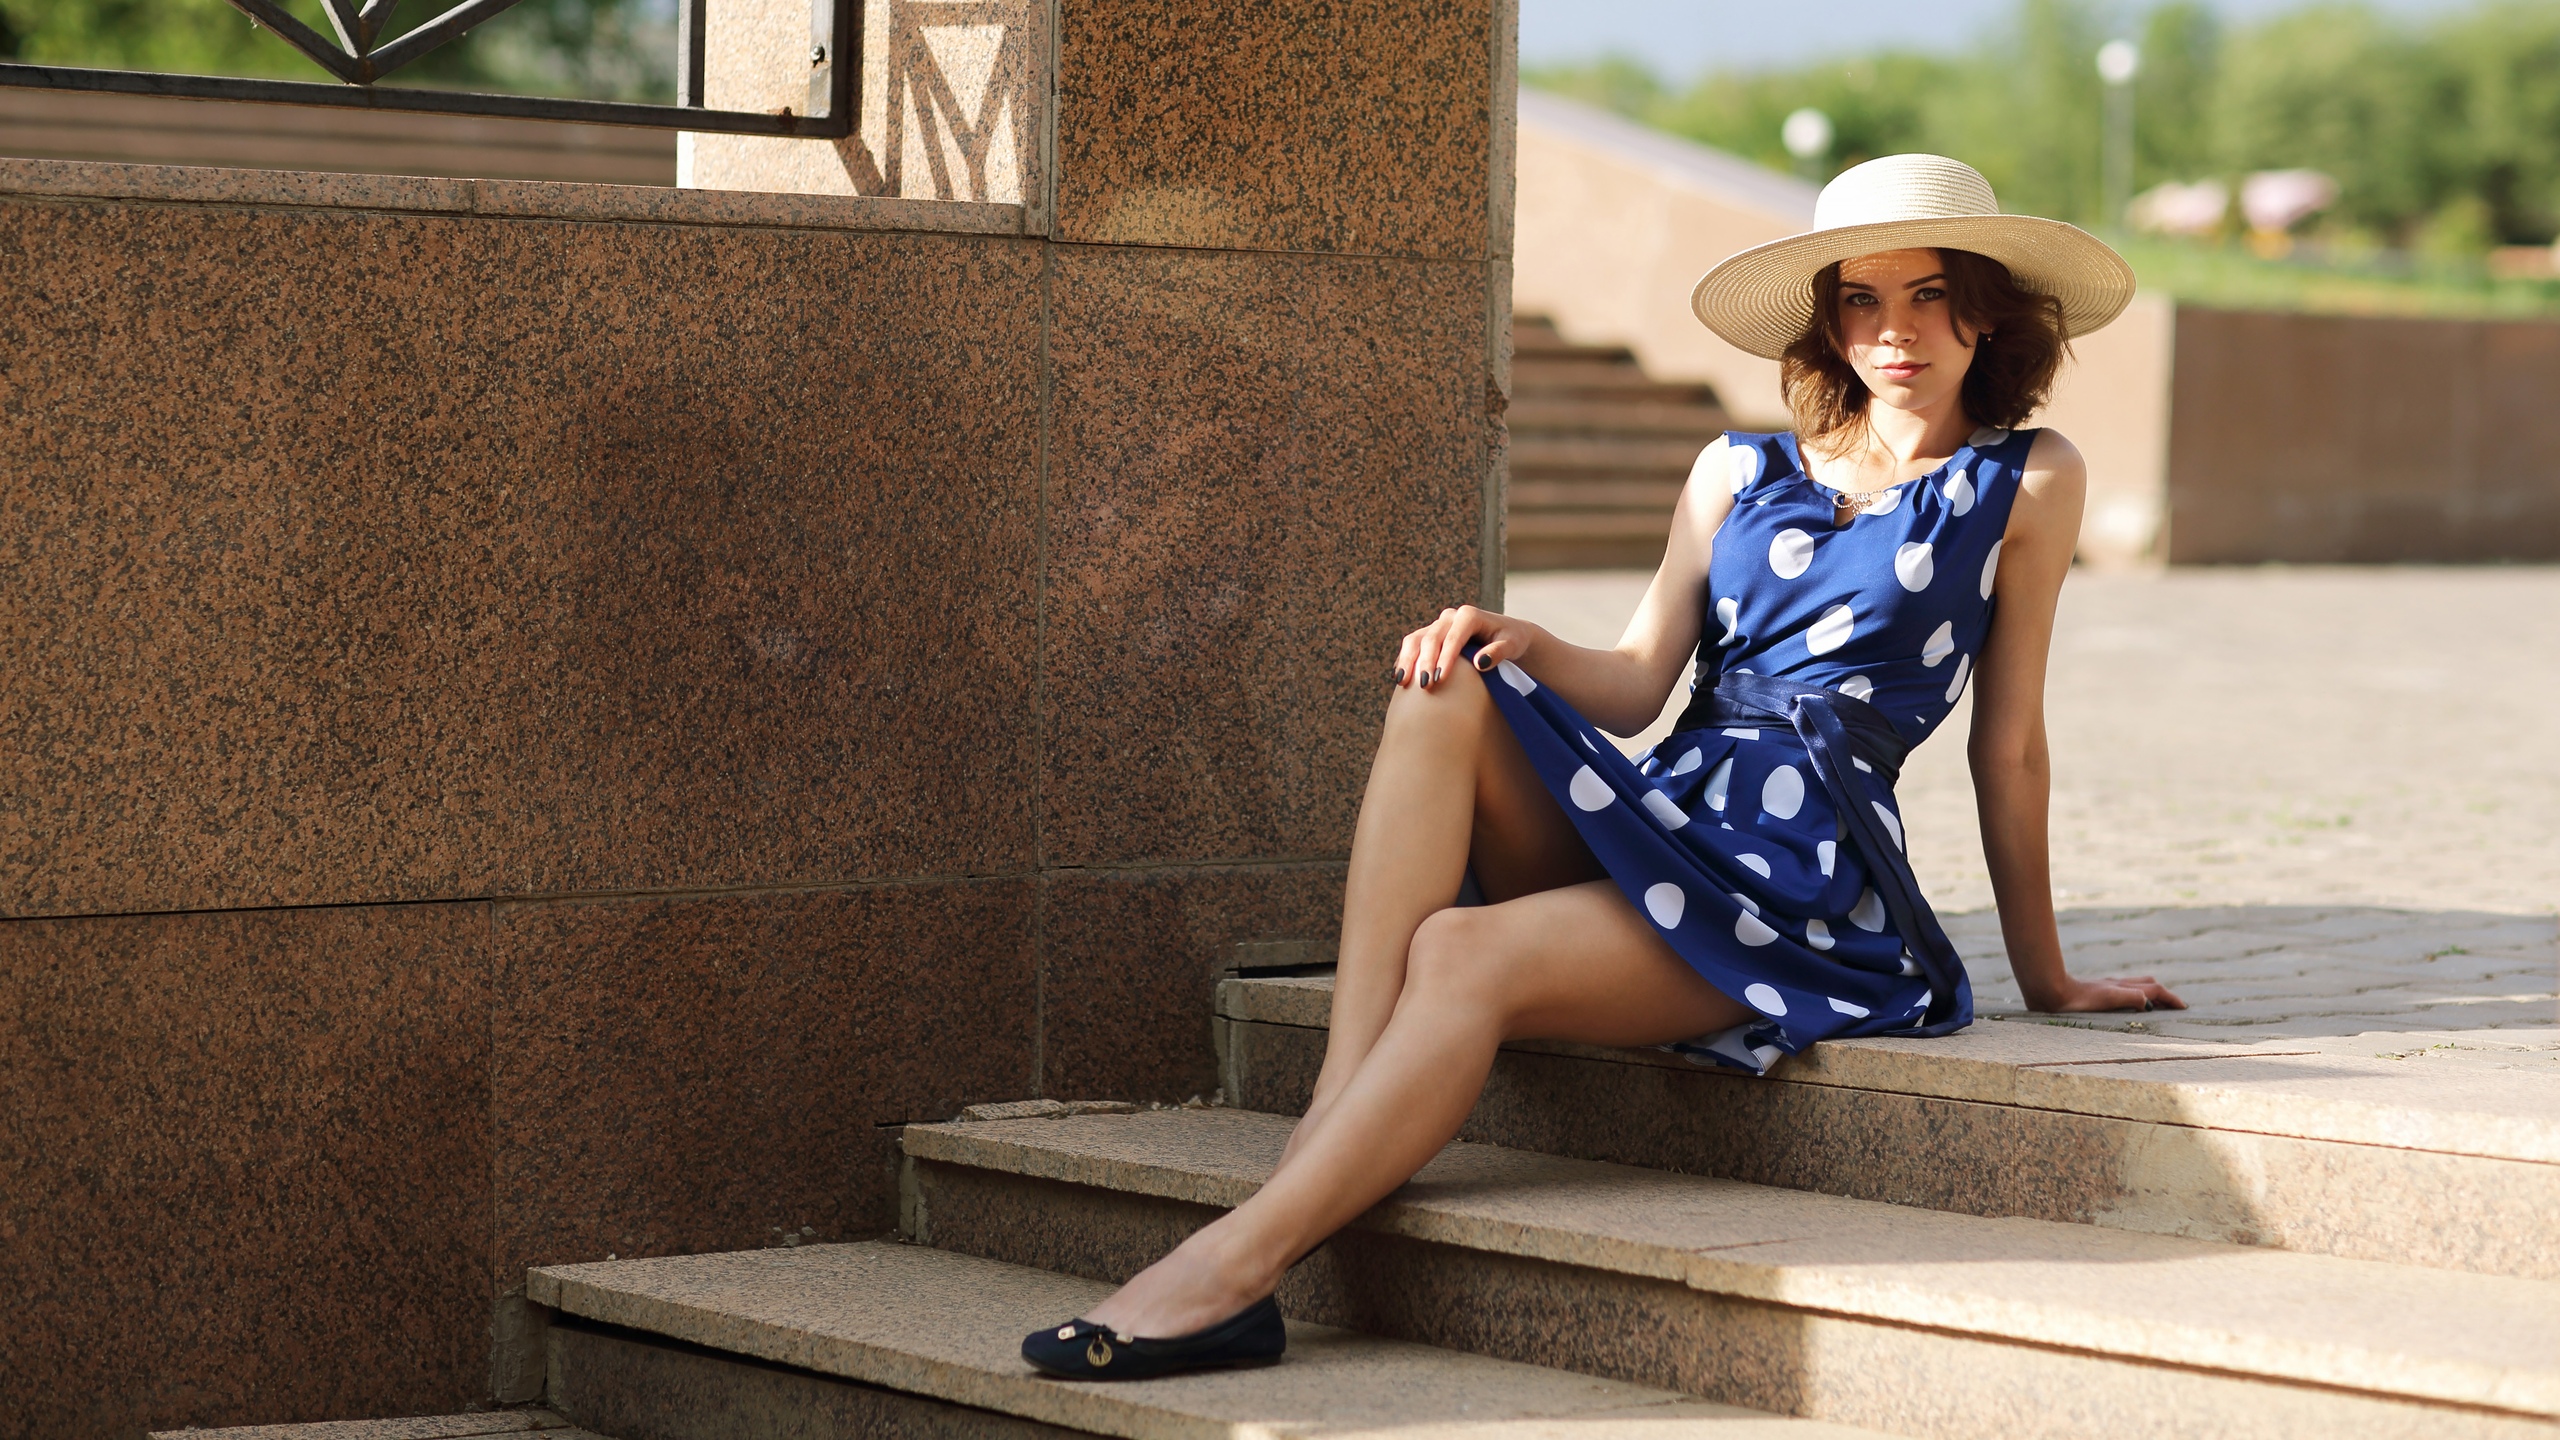 Murat Kuzhakhmetov Stairs Legs Dress Women Outdoors Model Hat Urban Women Blue Dress 2560x1440